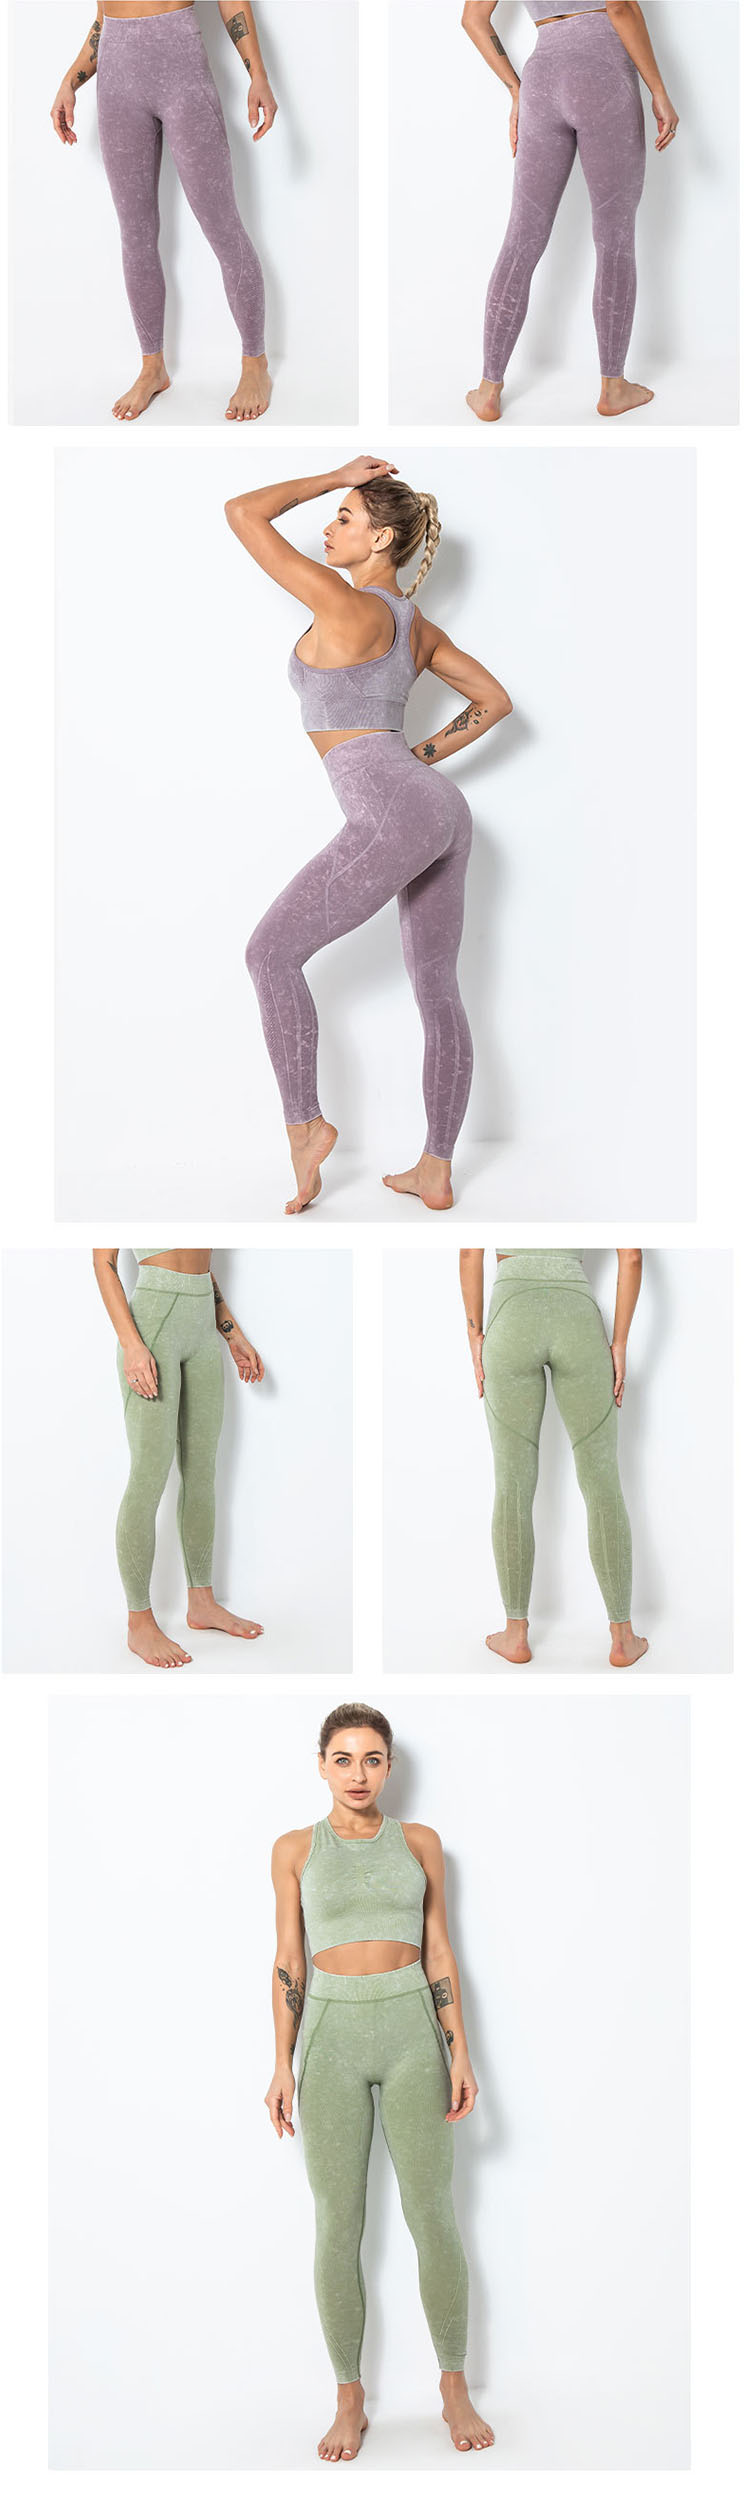 Flexiflow | Active Yoga Apparel – Flexiflow Yoga Clothes and Activewear |  瑜伽及運動裝時尚服飾店